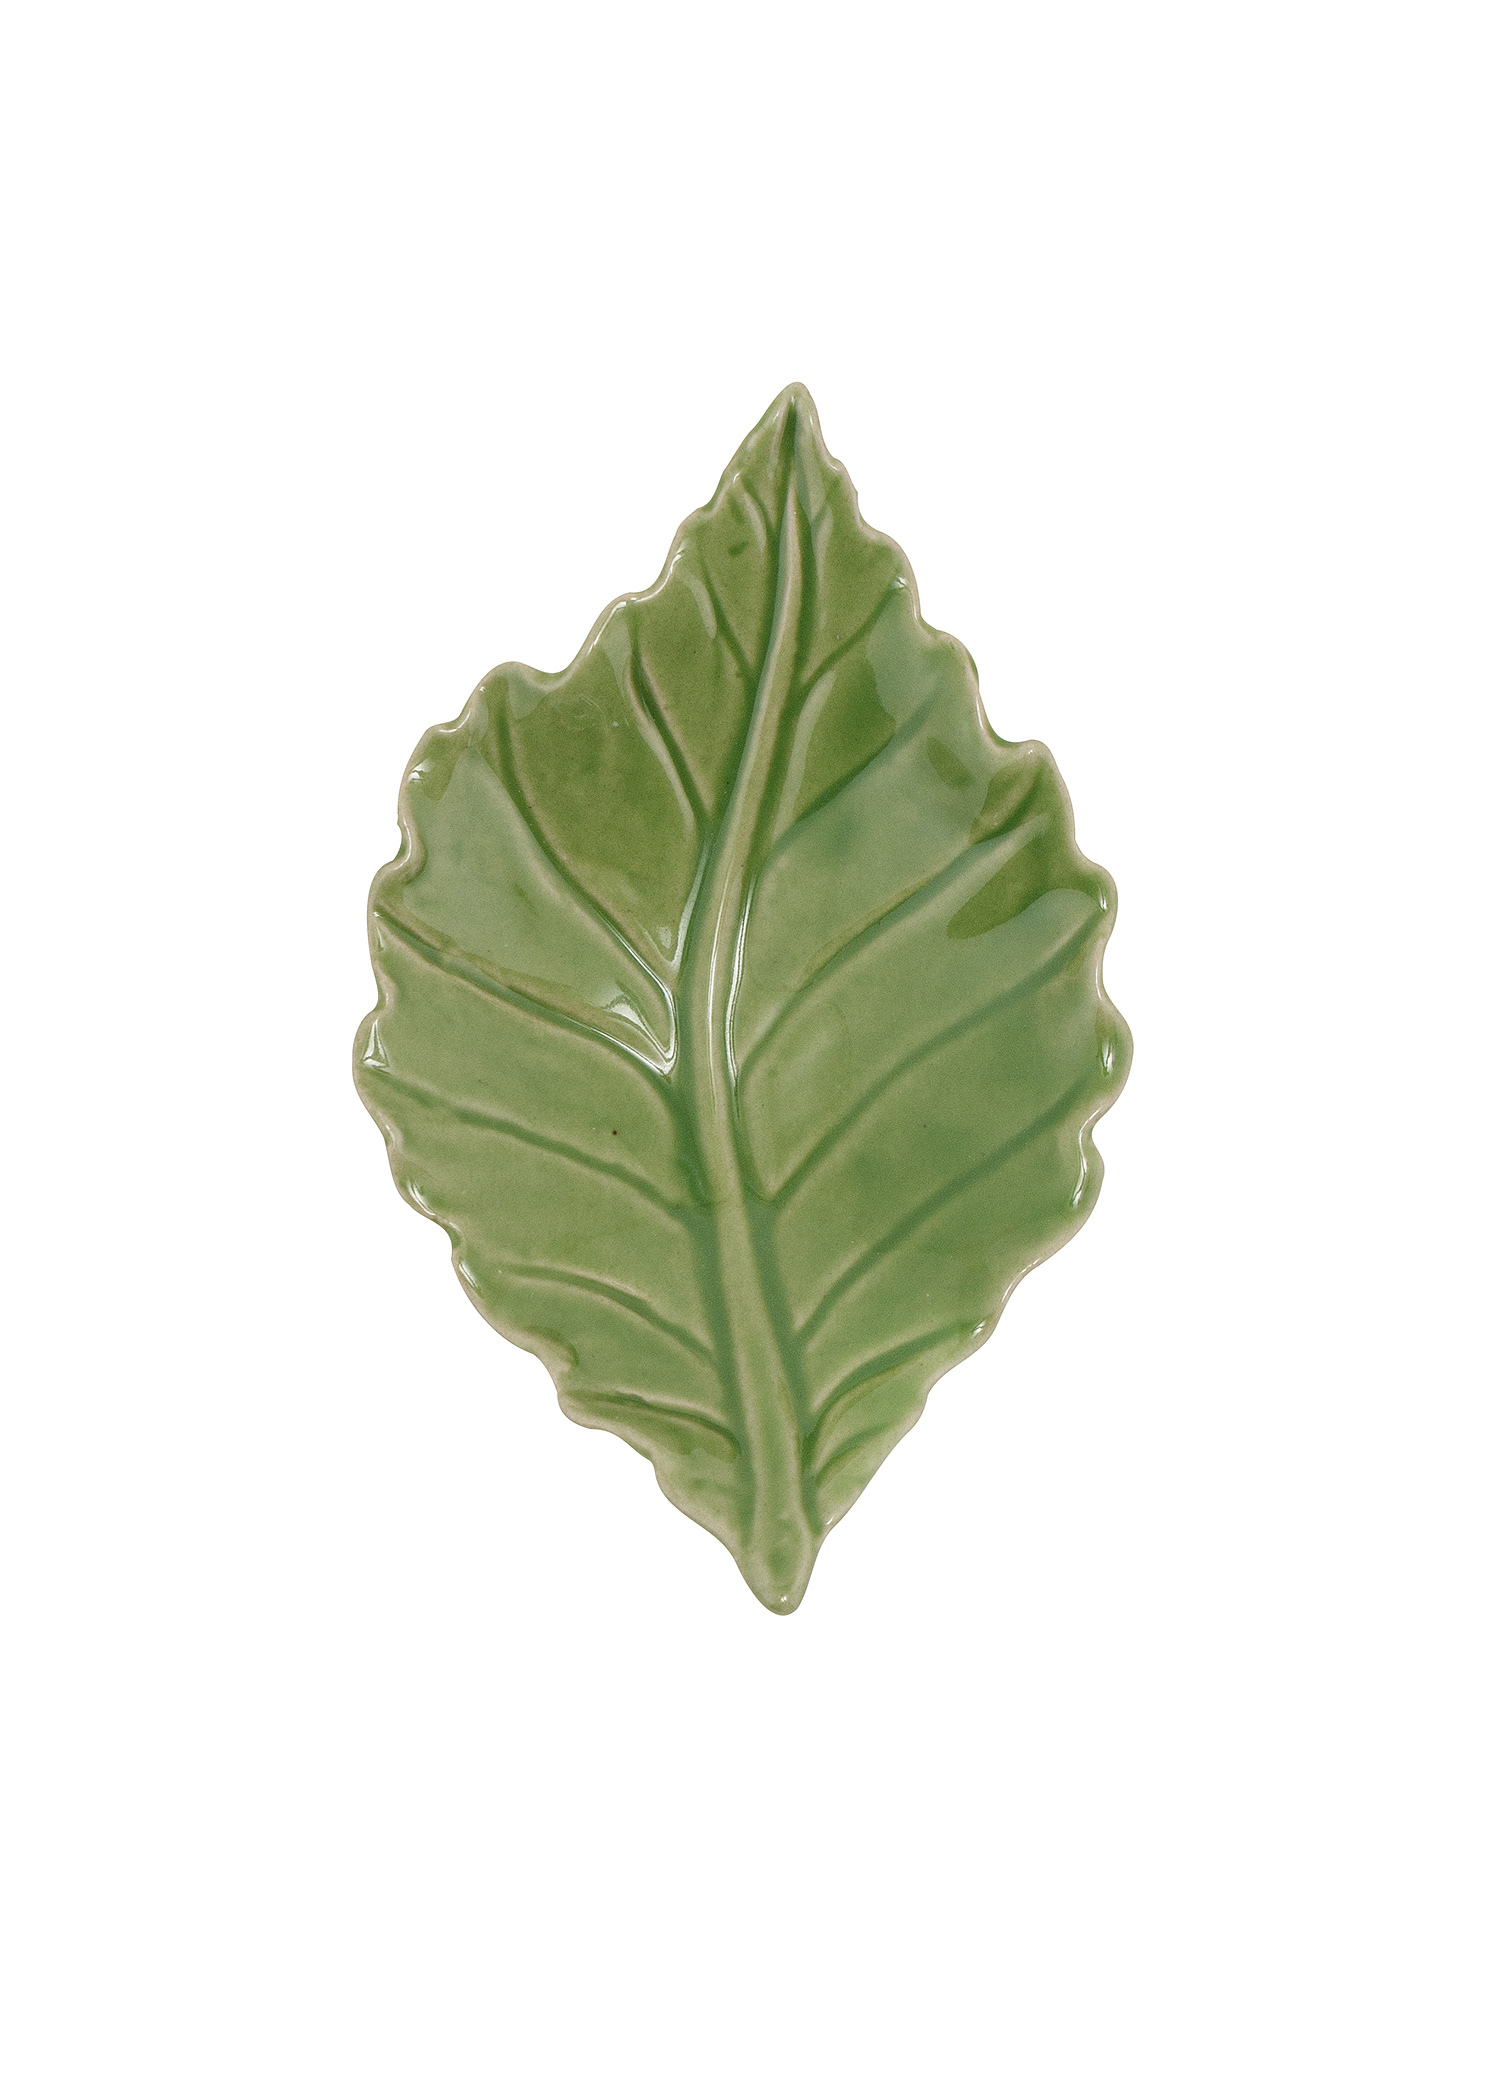 Small leaf-shaped tray